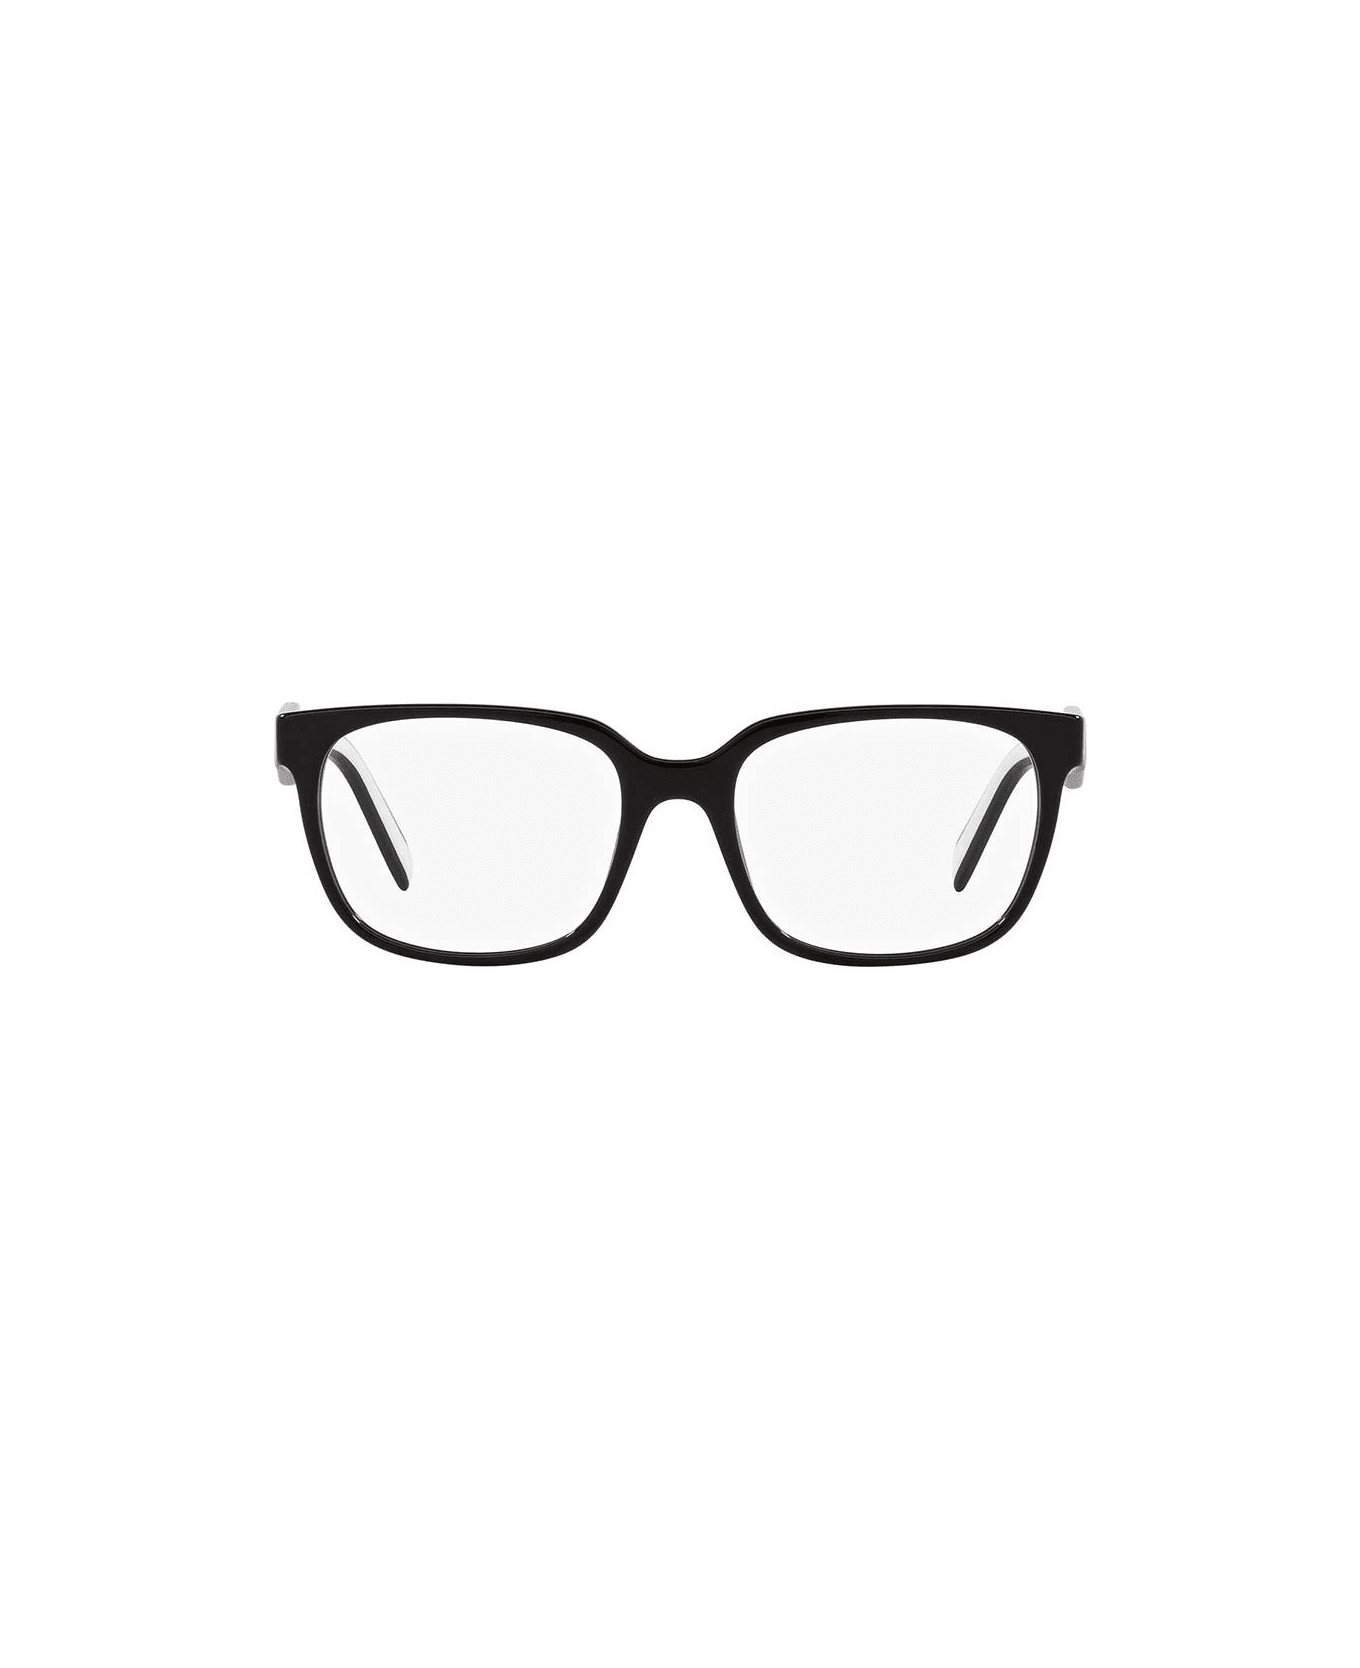 Prada Eyewear Glasses - Nero